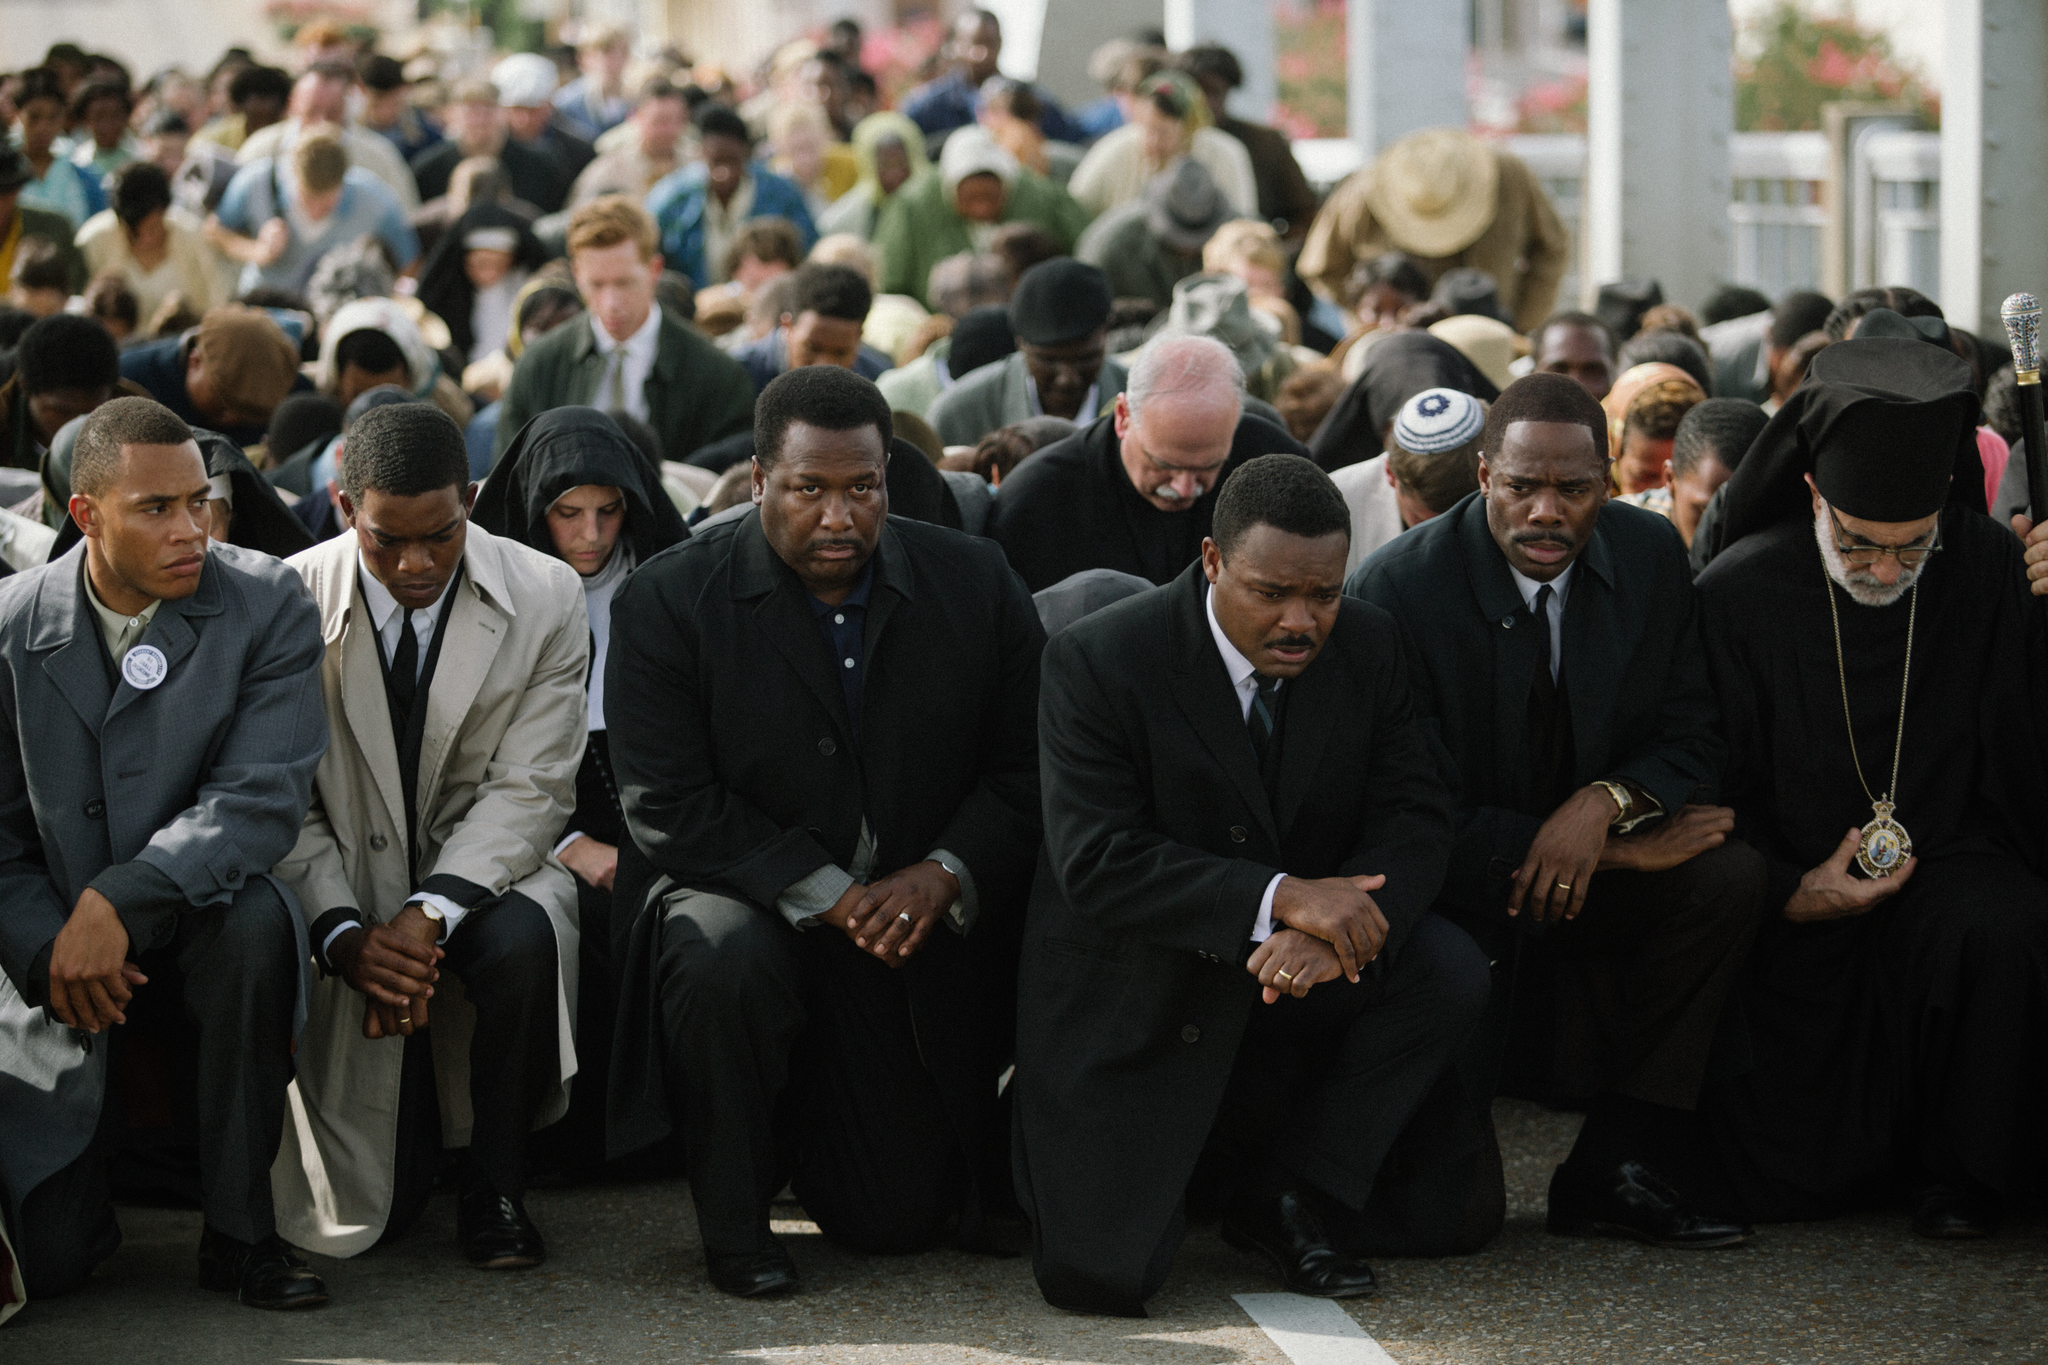 movie still of march crowd in Selma